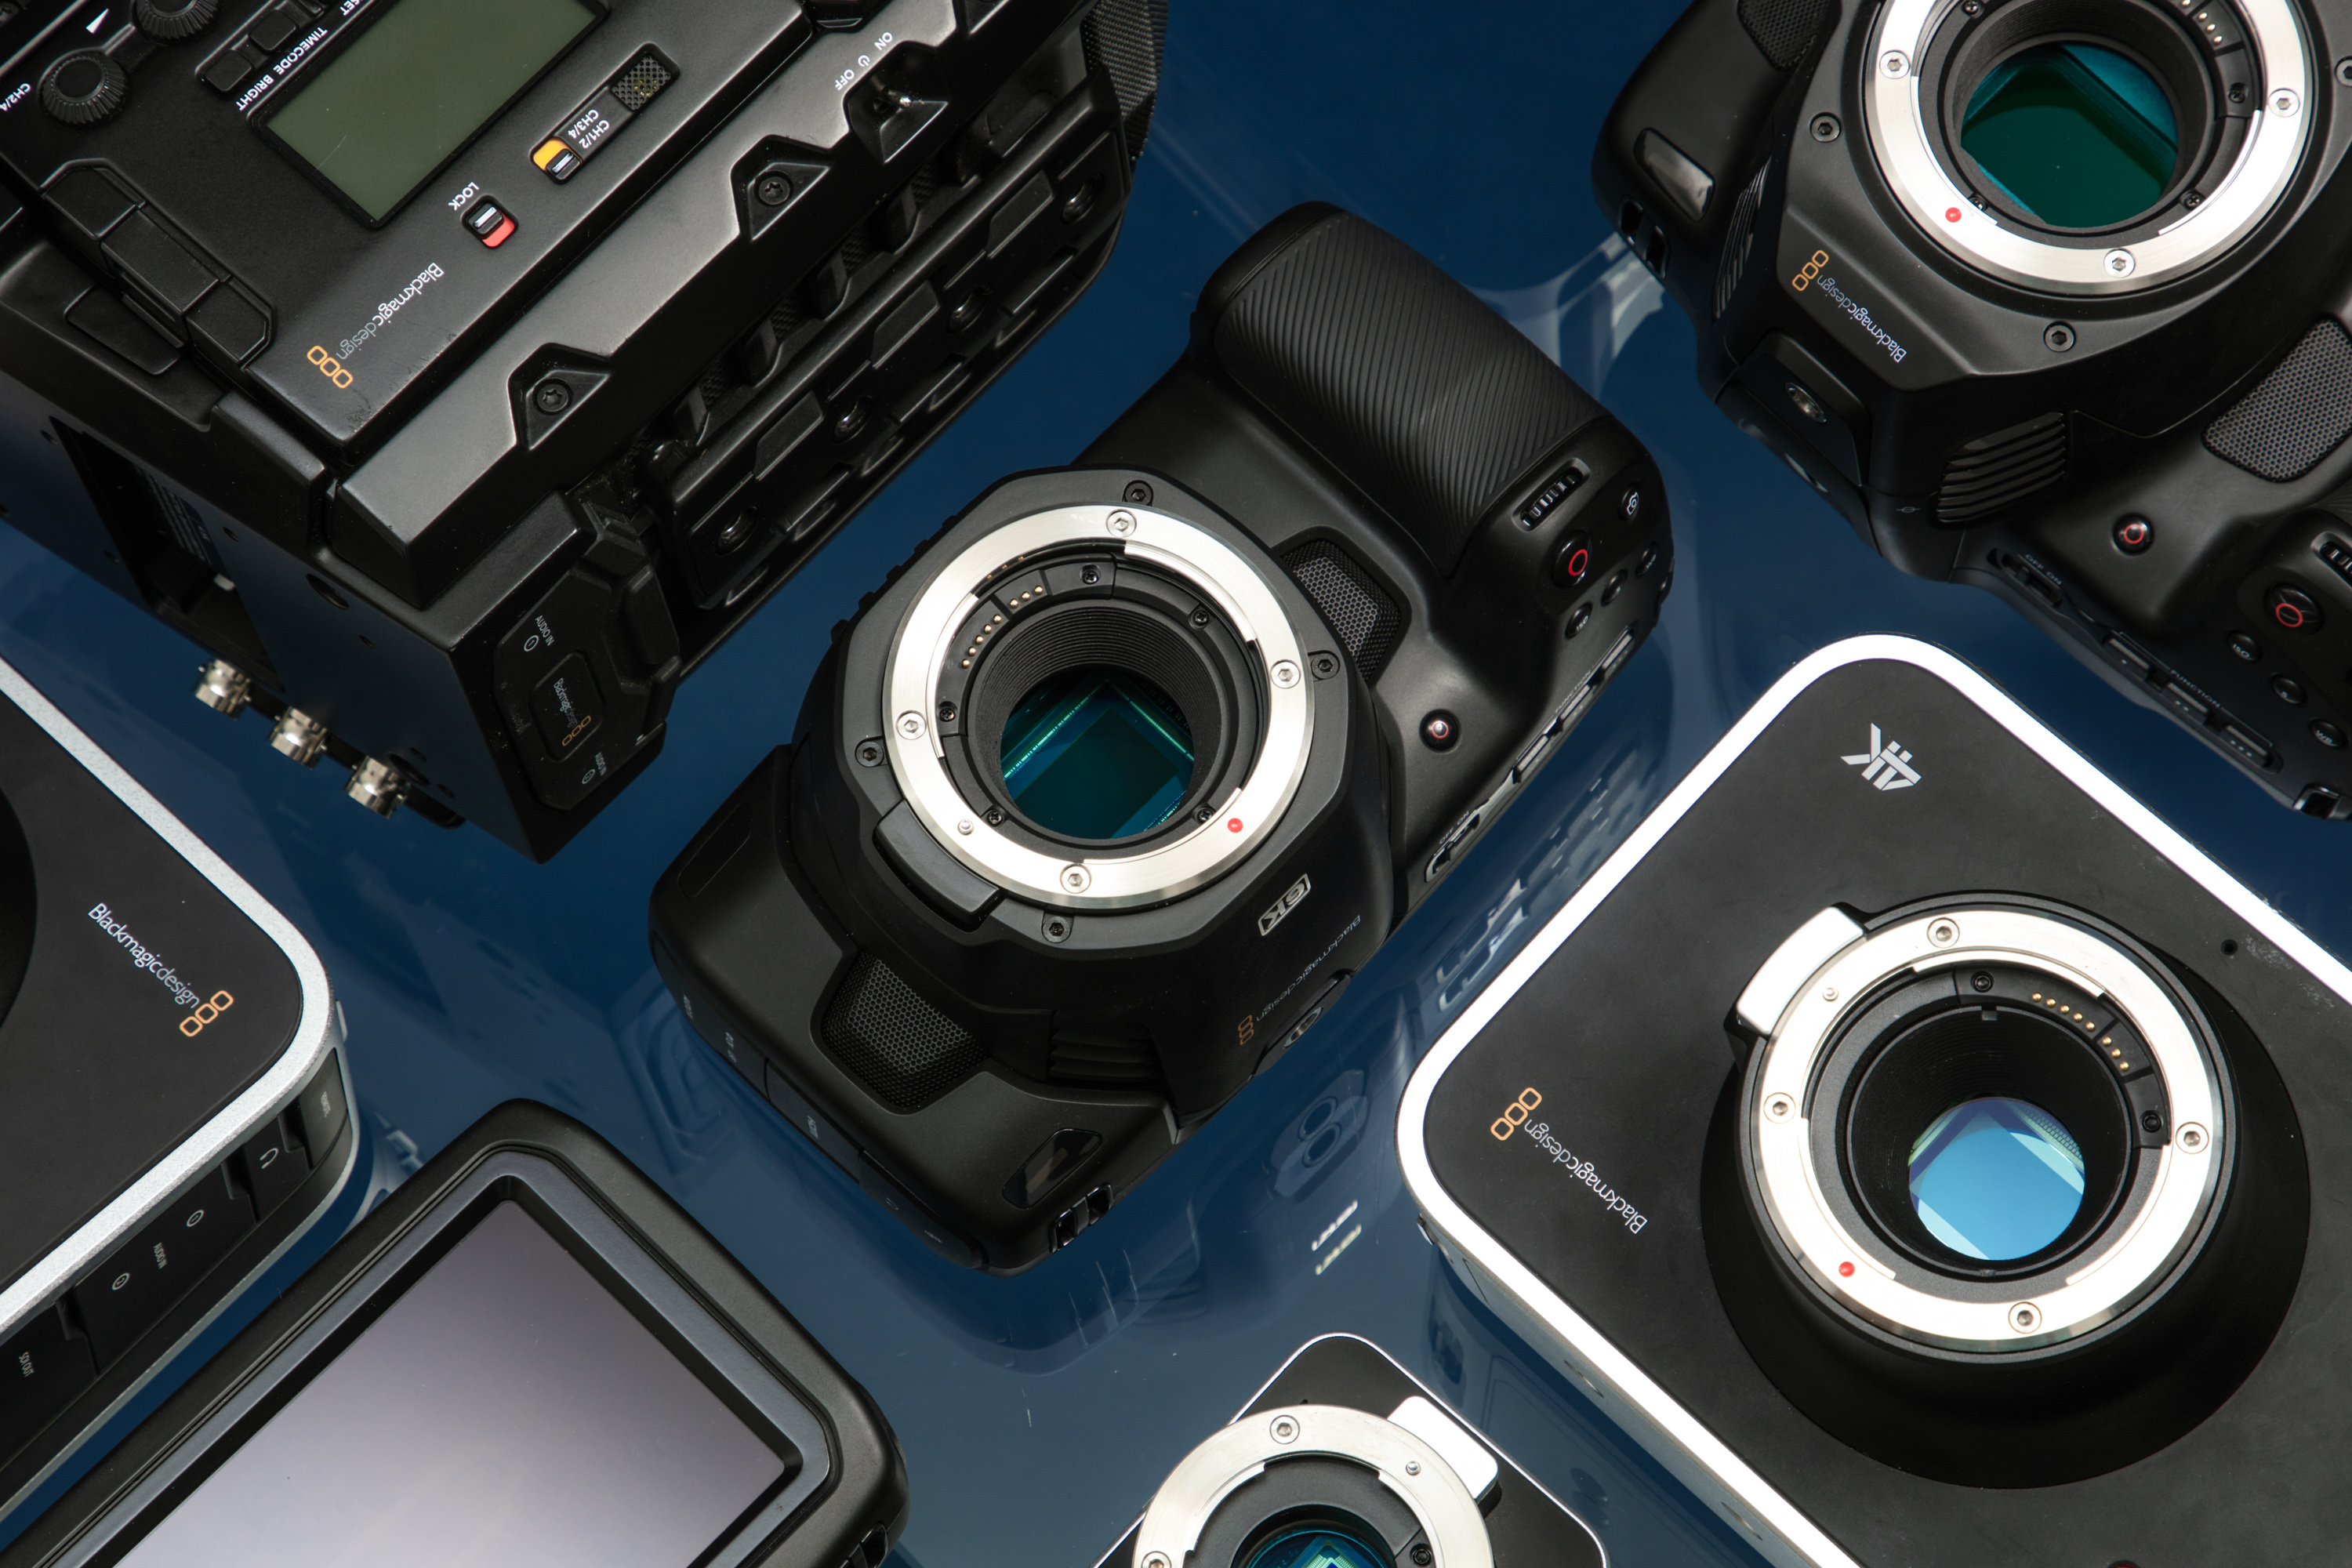 Blackmagic Design cameras